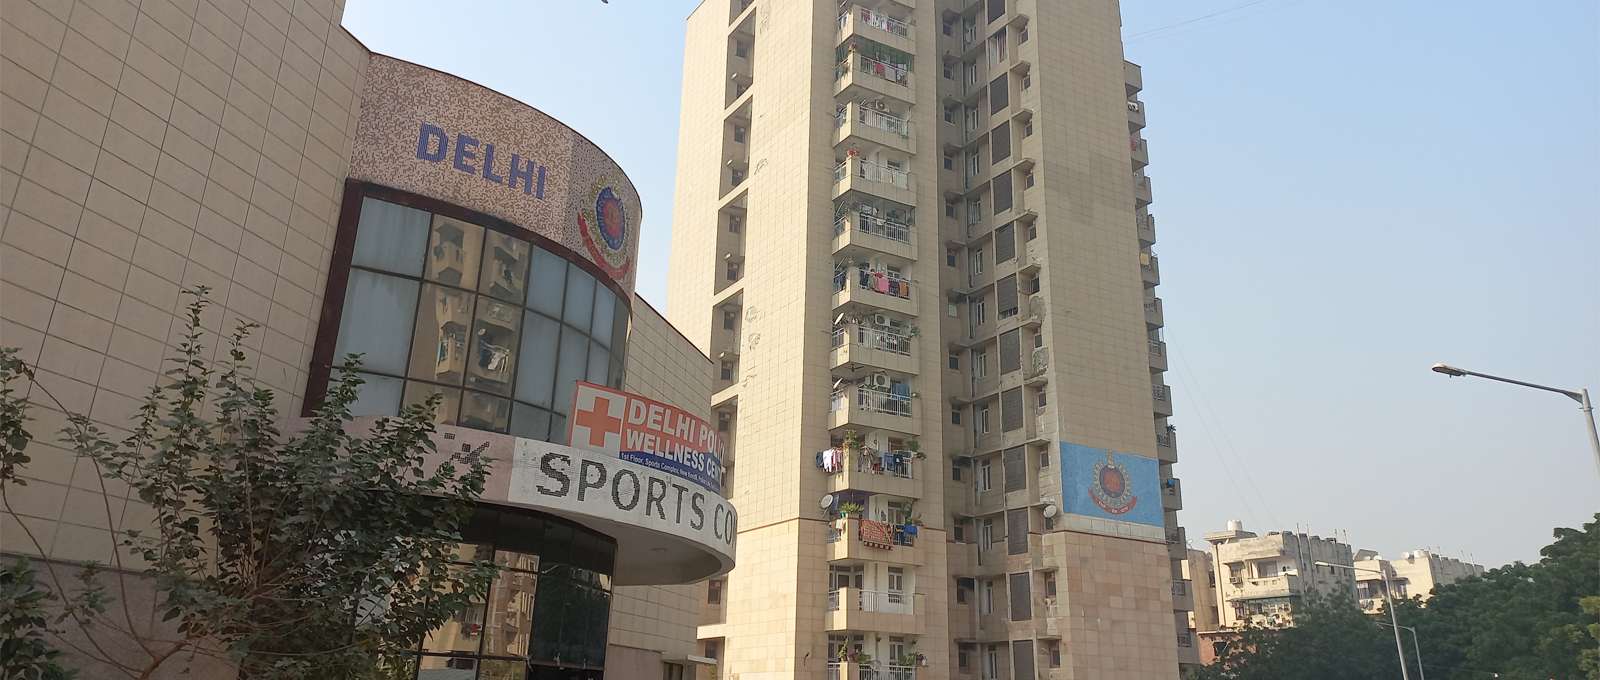 Delhi Police Housing Corporation Limited